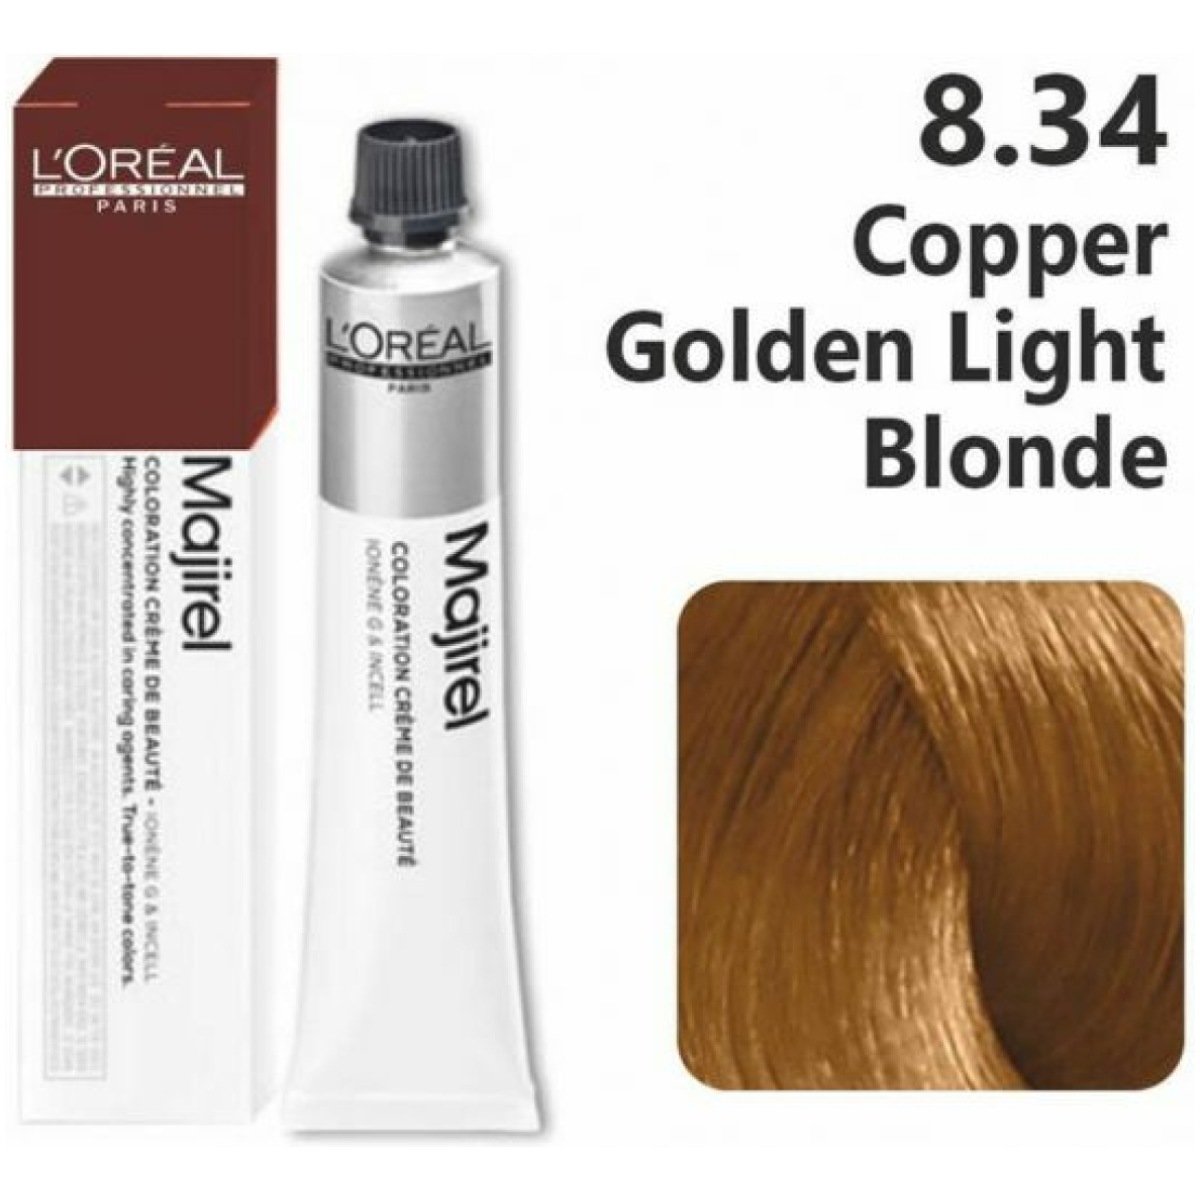 L’Oreal Majirel Hair Color 50G 8.34 Copper Golden Light Blonde + Oxidant 1000Ml Combo